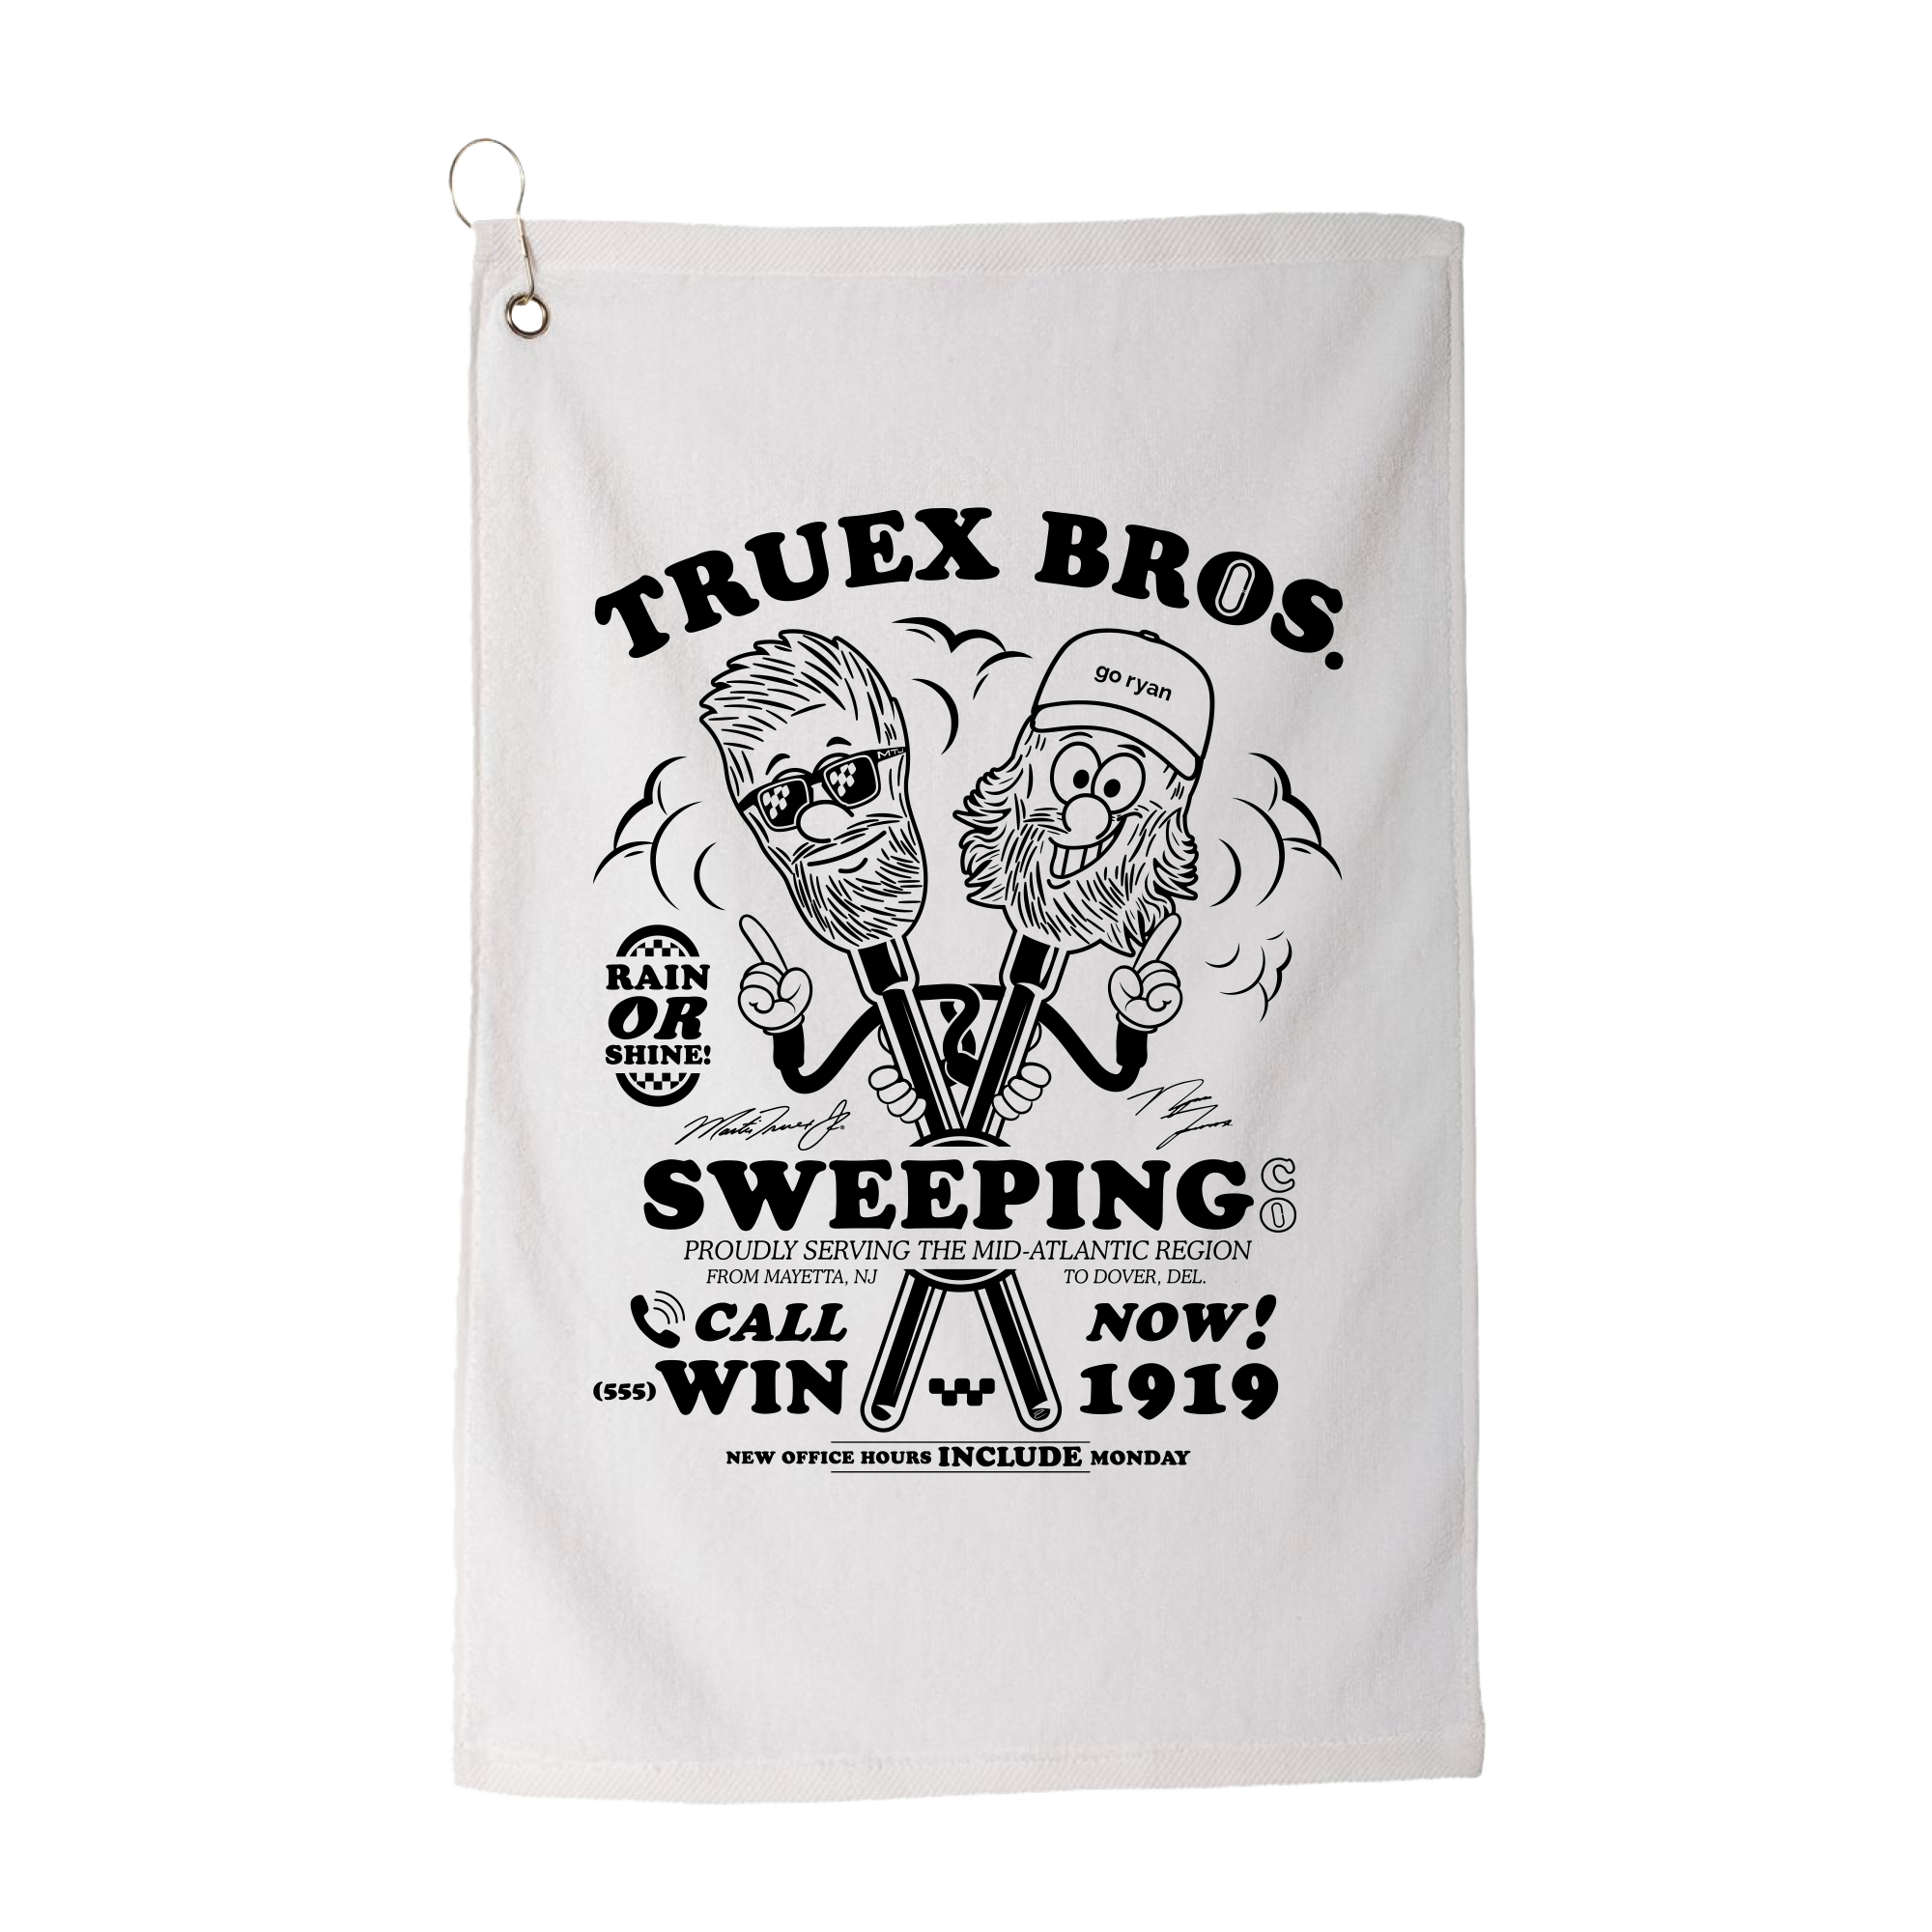 Truex Brothers Sweeping Co. Towel